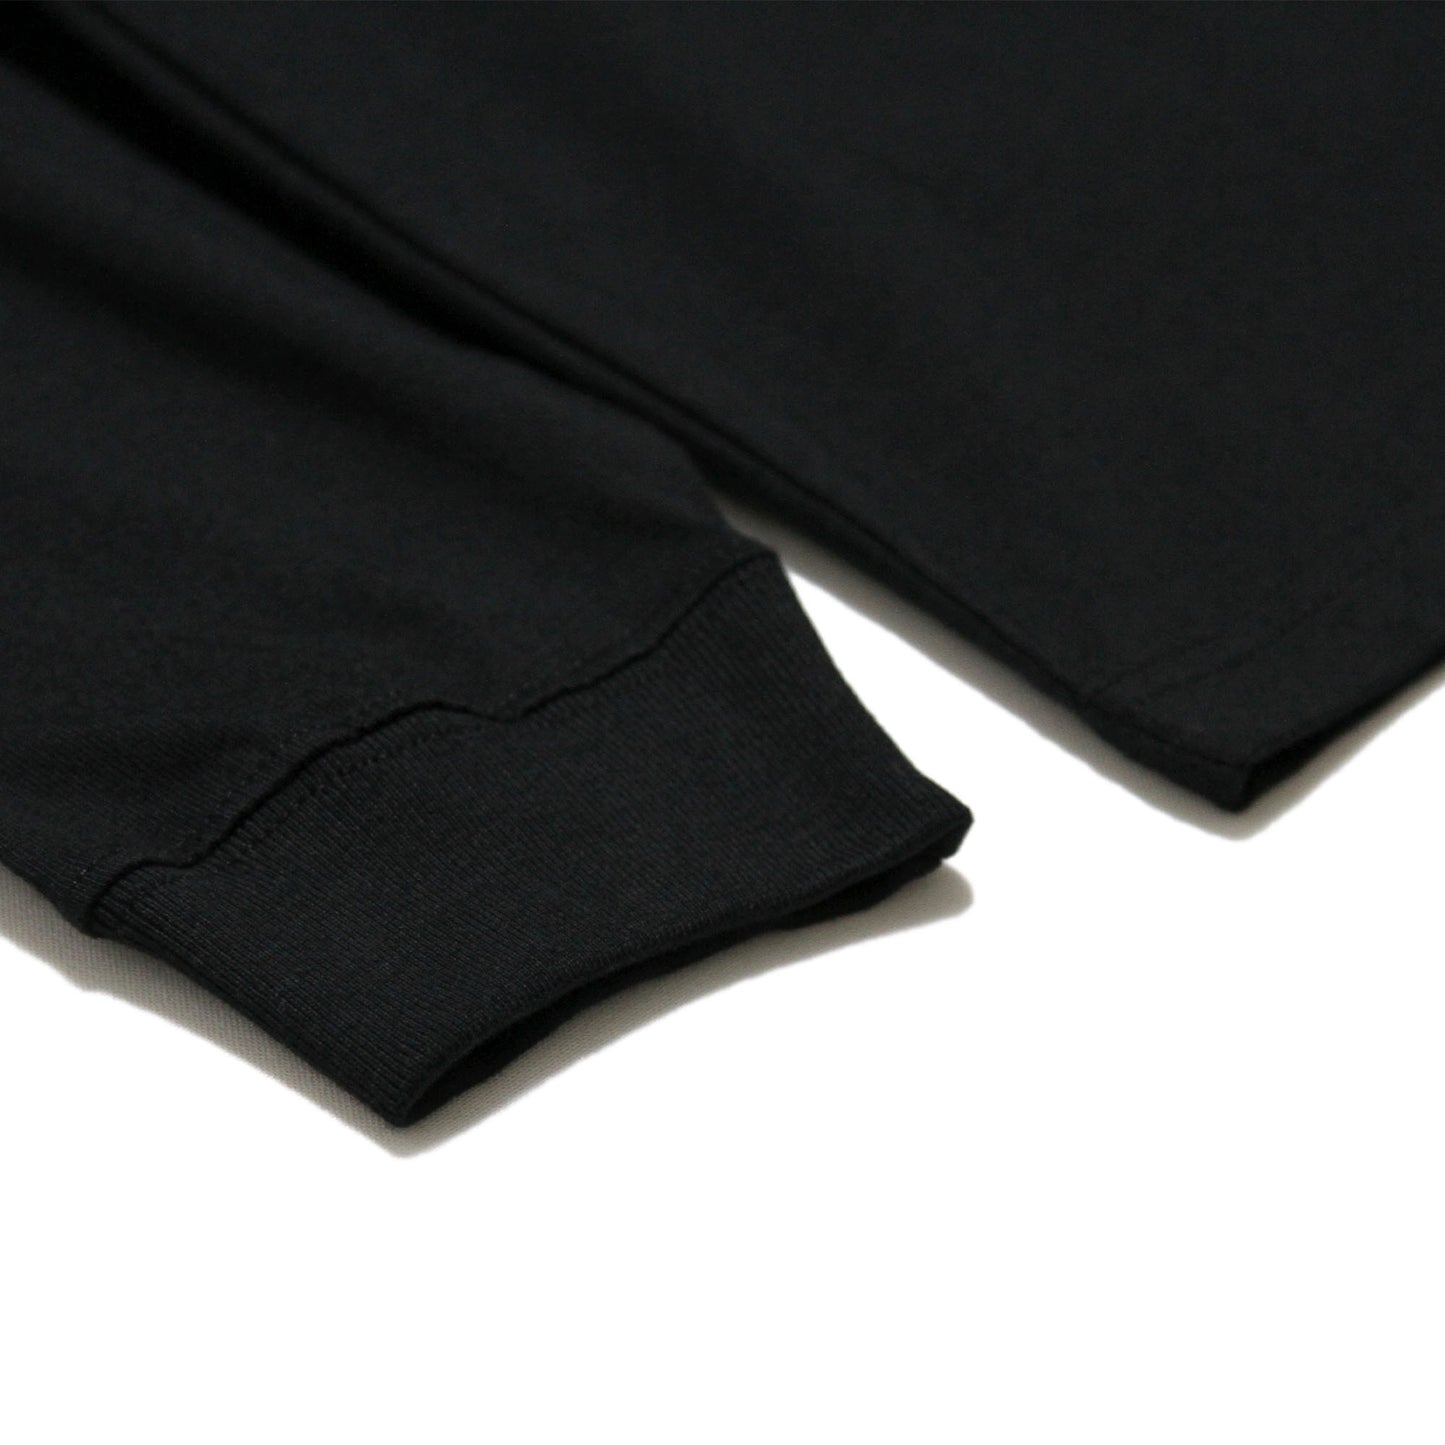 MOTO-BUNKA - Civilization Long Sleeve T-Shirt/Black